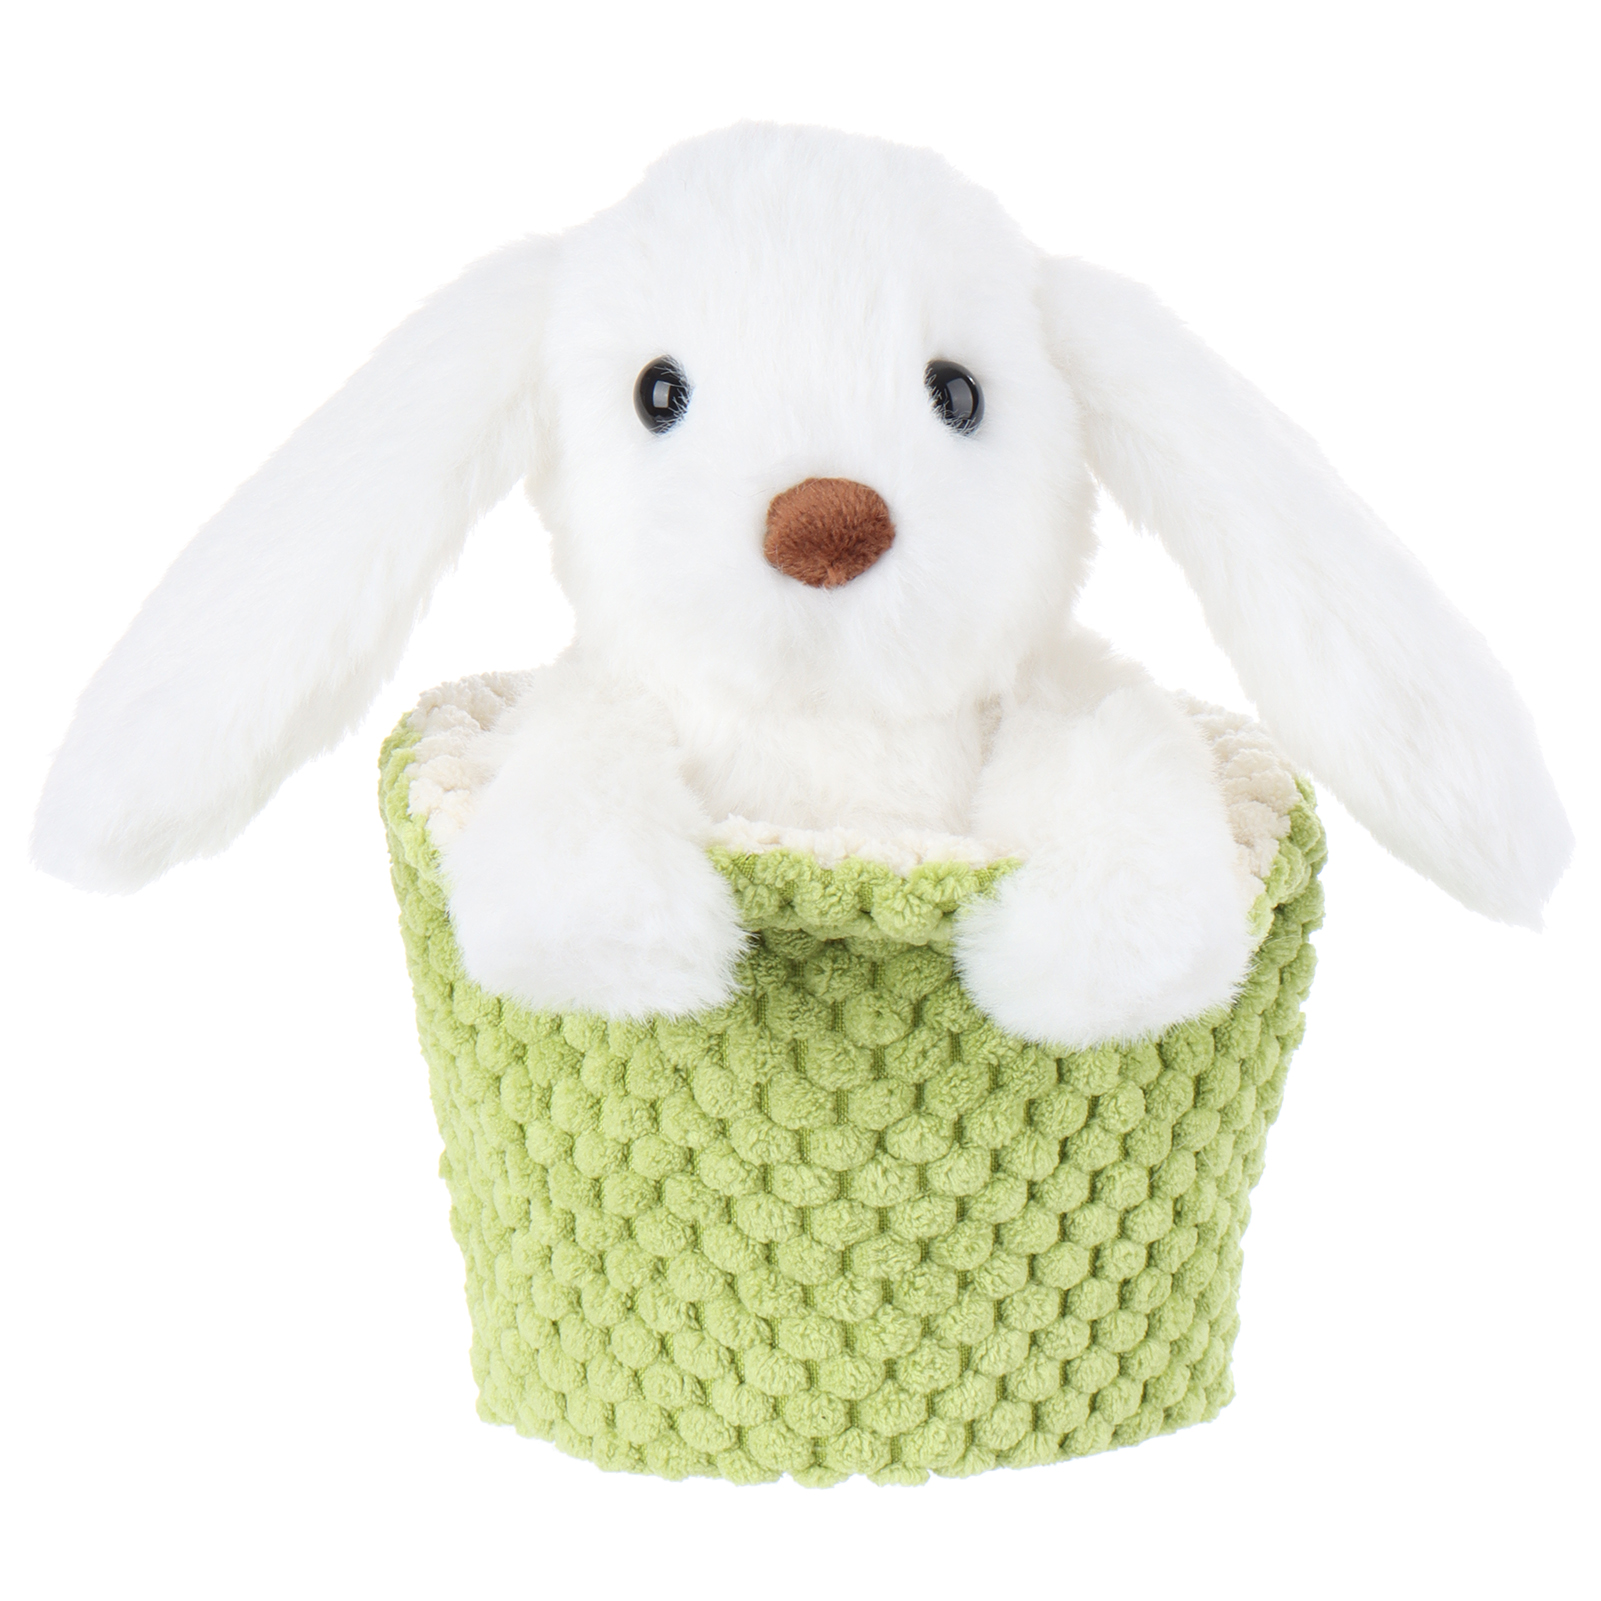 China Apricot Lamb Teacup Bunny-Green Stuffed Animal Soft Plush